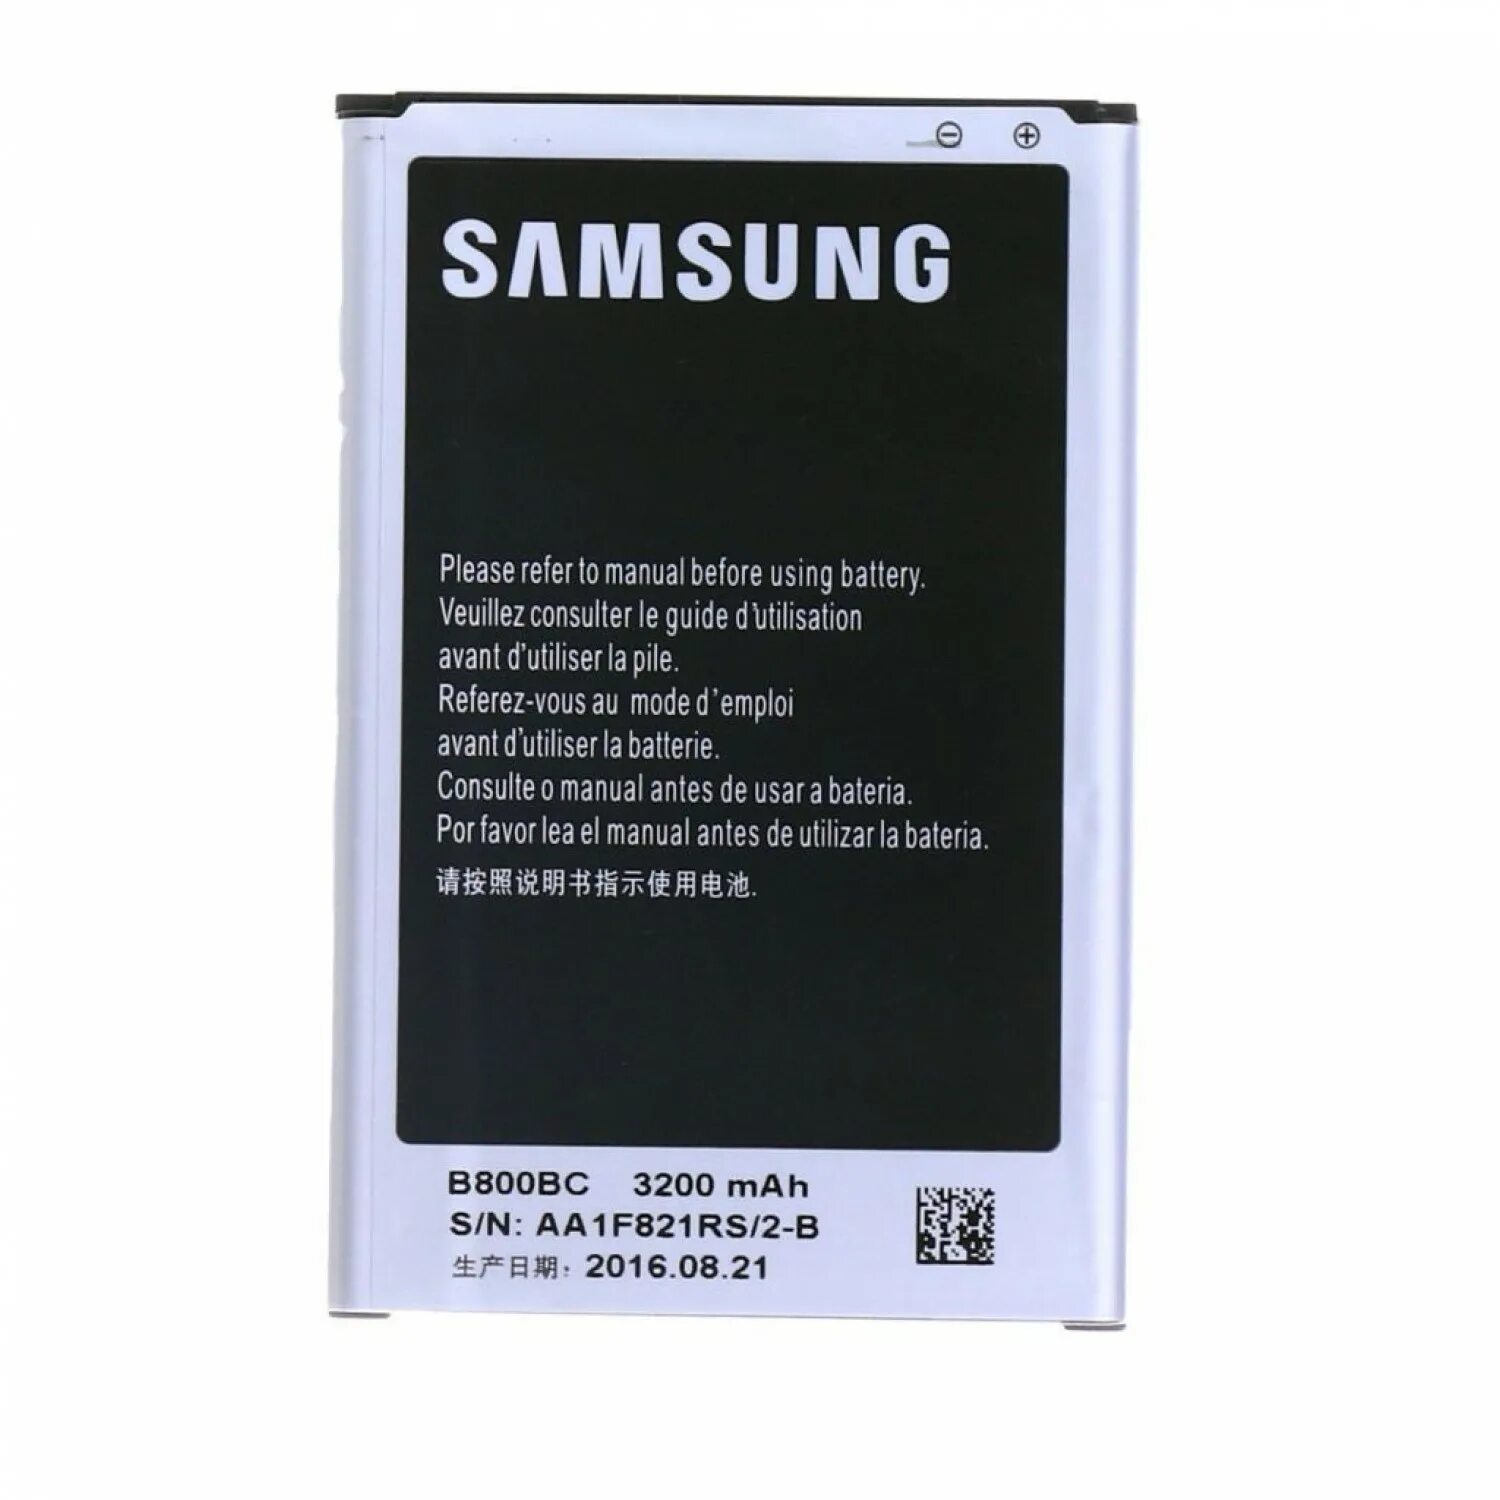 Купить аккумулятор samsung note. Samsung Galaxy s4 Mini аккумулятор. Аккумулятор для Samsung Galaxy Note 3 (n9000)/Note 3 LTE (n9005) (b800be). Аккумулятор Samsung n7000 оригинальный. Аккумулятор для телефона IBATT IB-Samsung-gt-n7000-Galaxy-Note-m389.